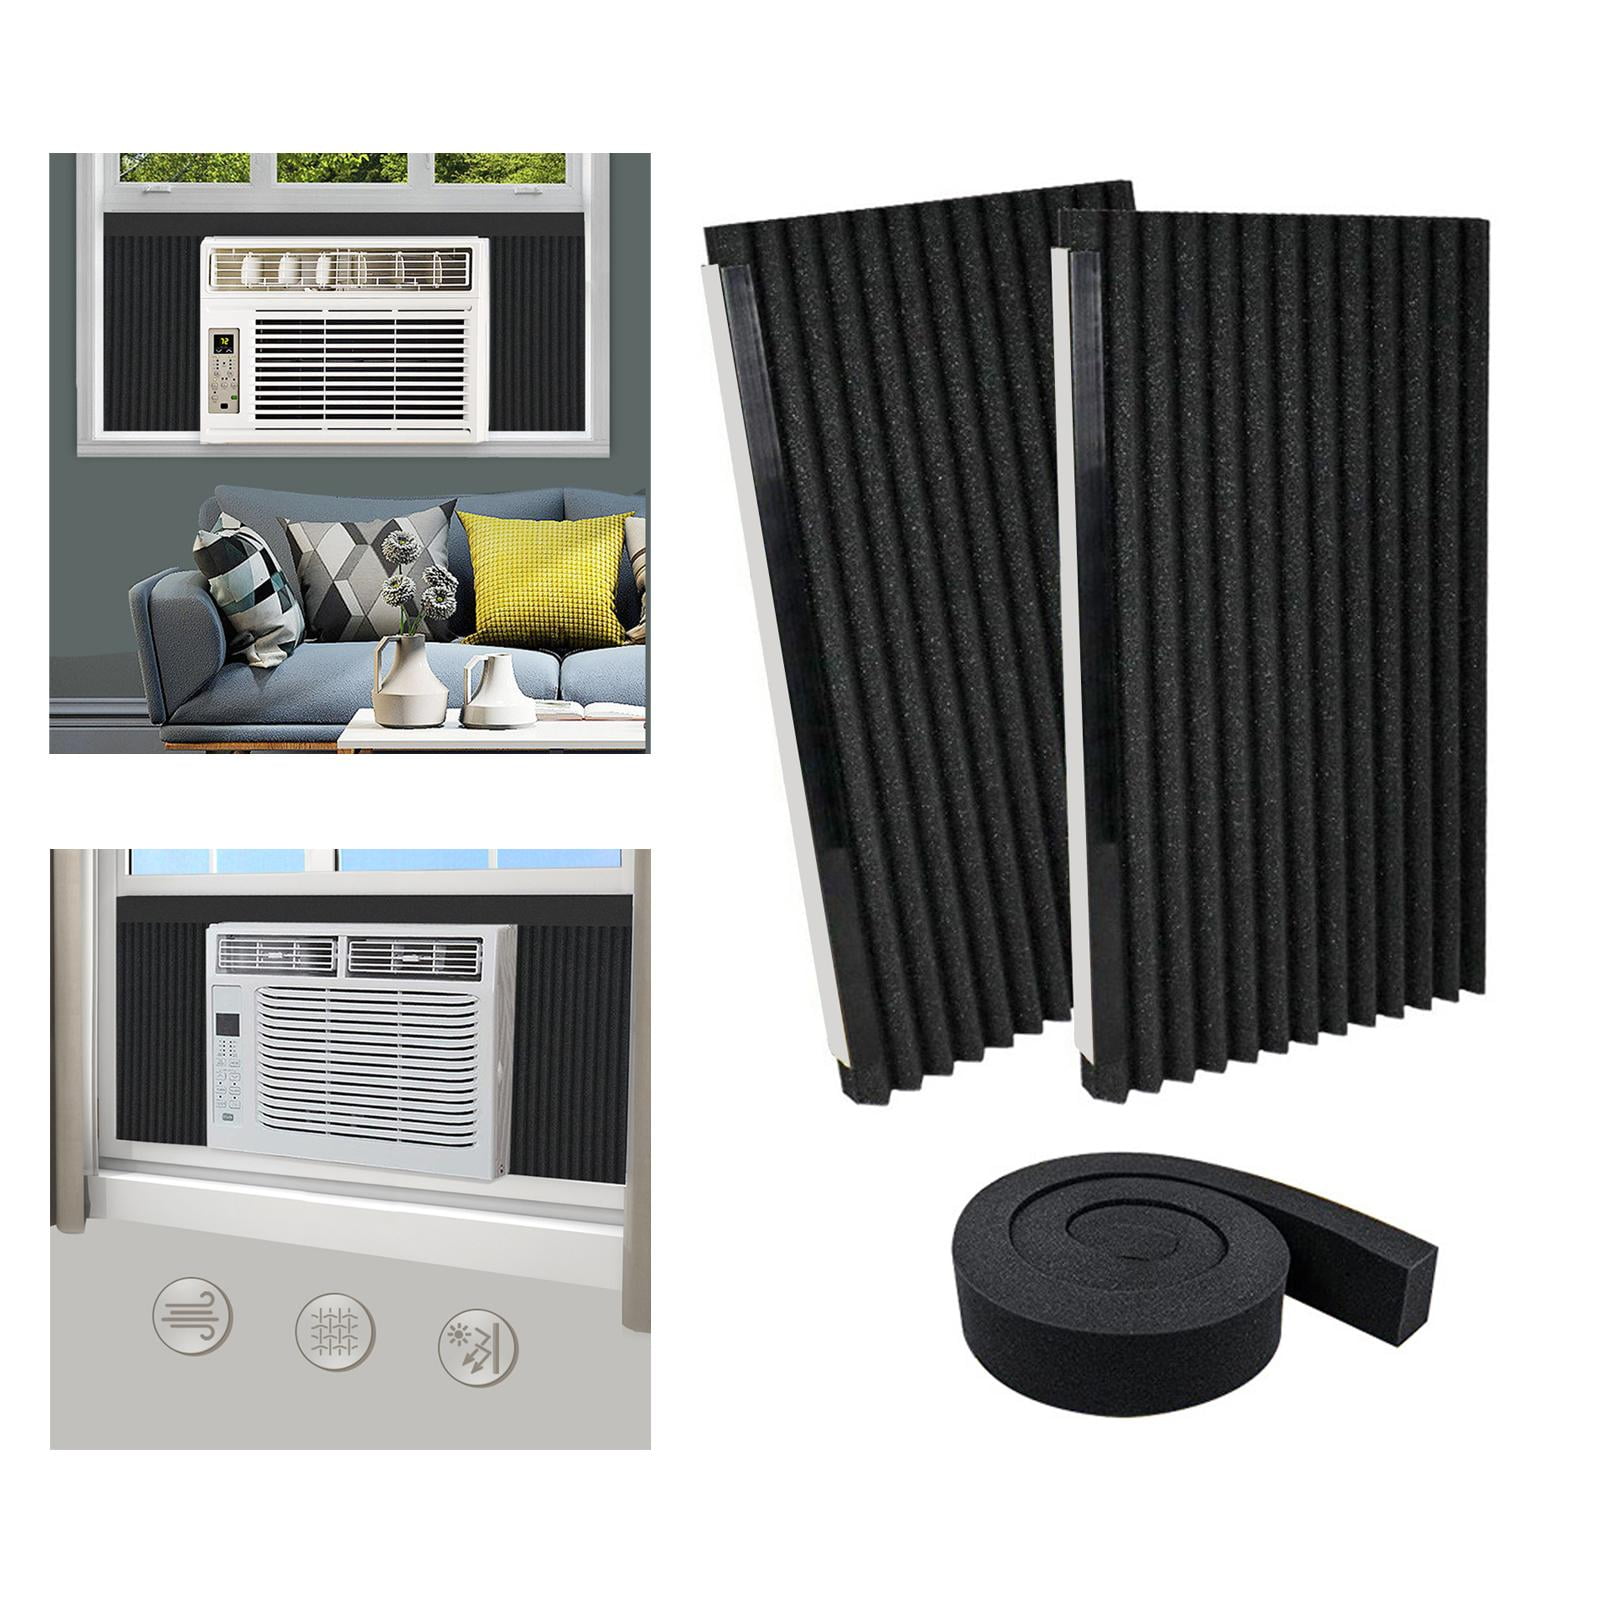 Tishita Window Air Conditioner Side Panels Foam Insulation and Foam Strip Self Paste, Size: 43.2cmx22.8cm, Black